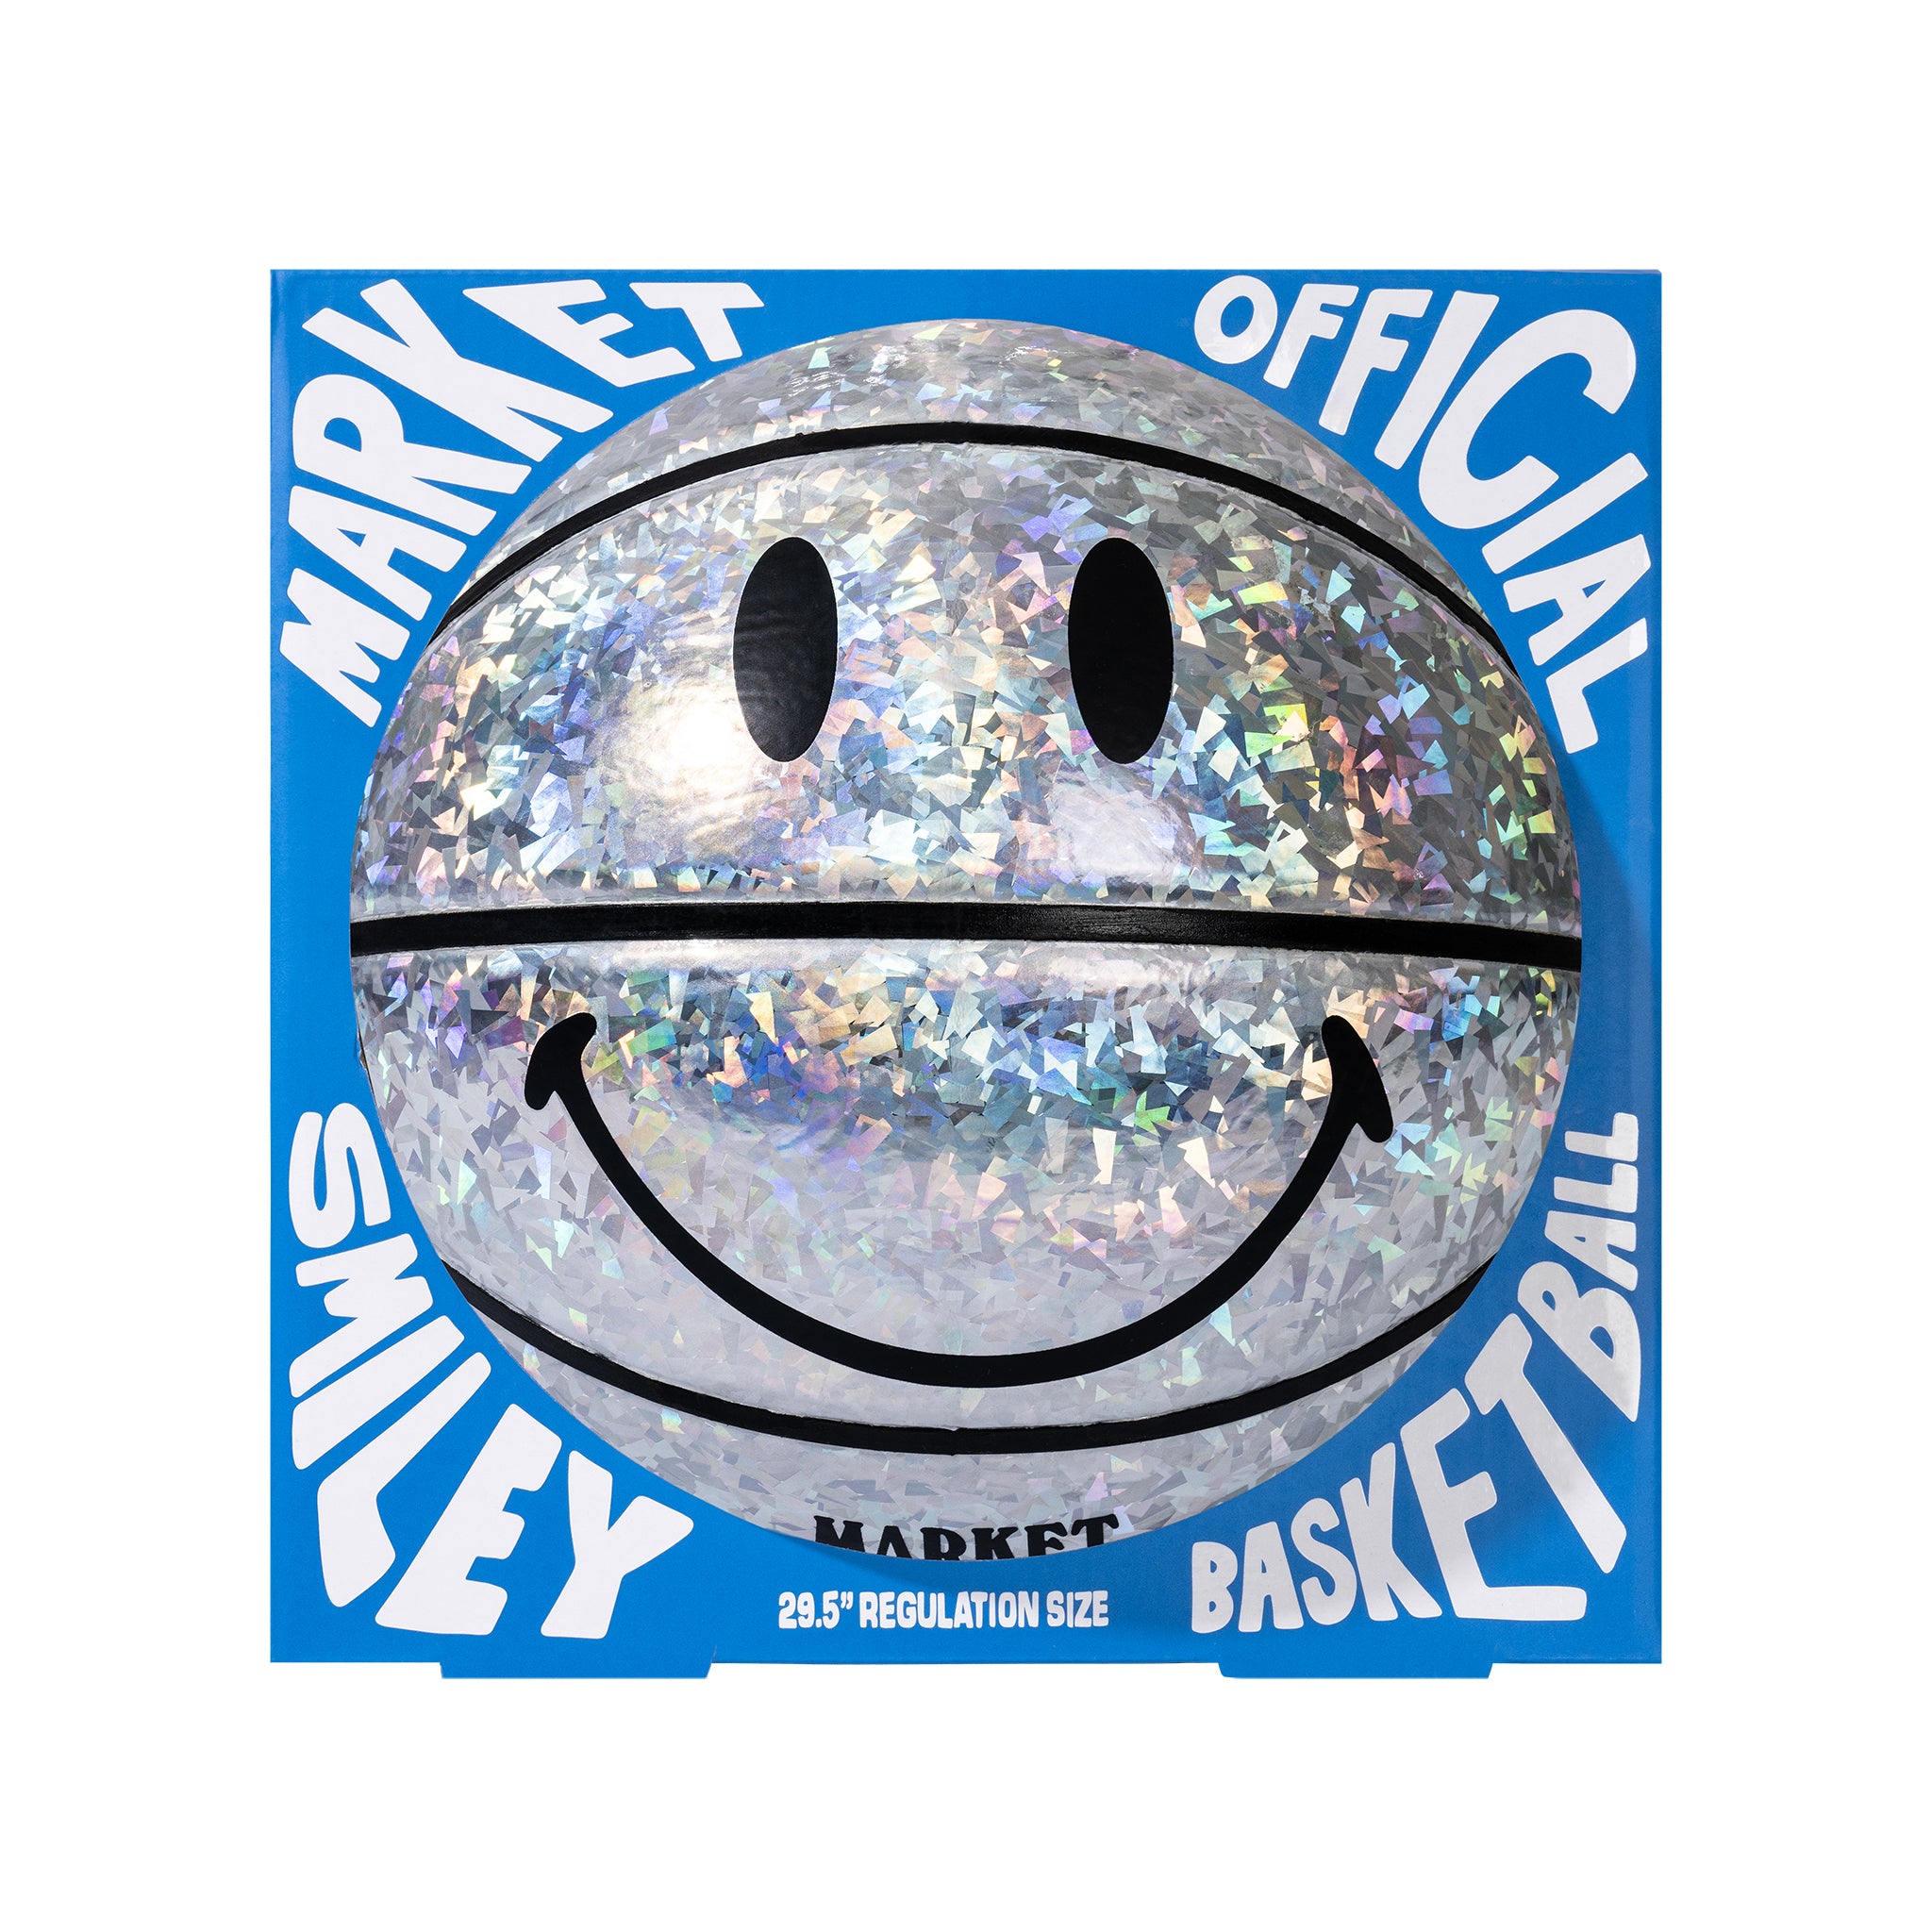 PURCHASE THE SMILEY HOLOGRAM BASKETBALL ONLINE | MARKET STUDIOS ...